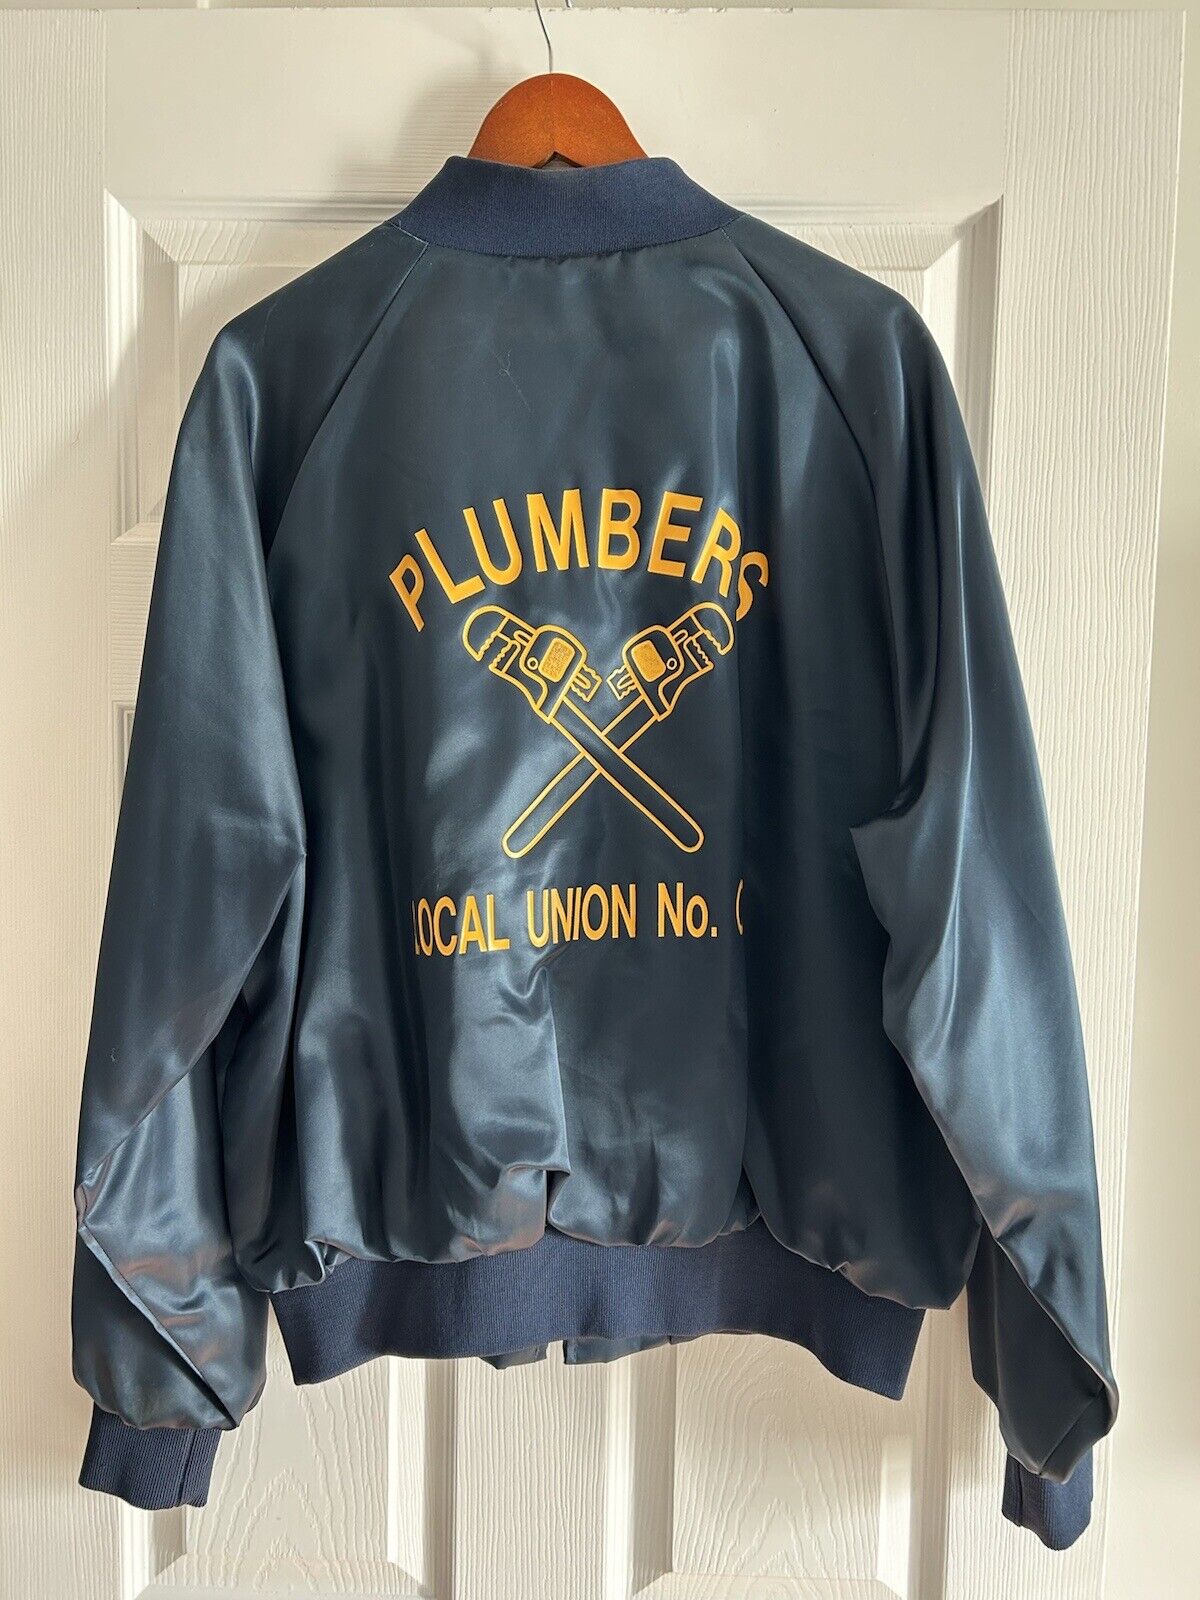 Vintage Satin 1970’s Plumbers Union Local One Jacket 